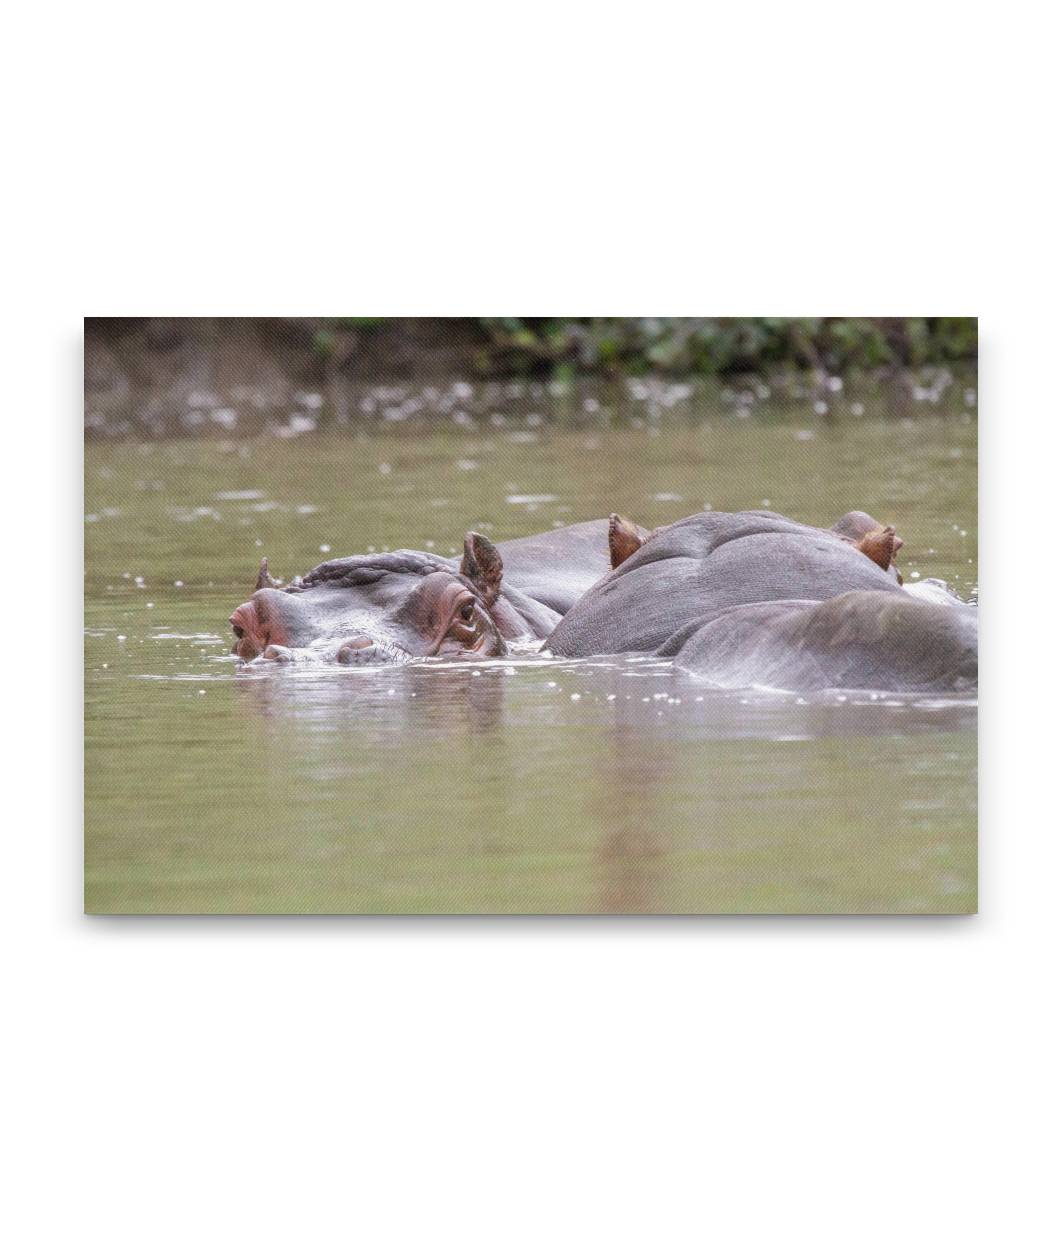 Hippopotamus, Wild Animal Park, Winston, Oregon, USA